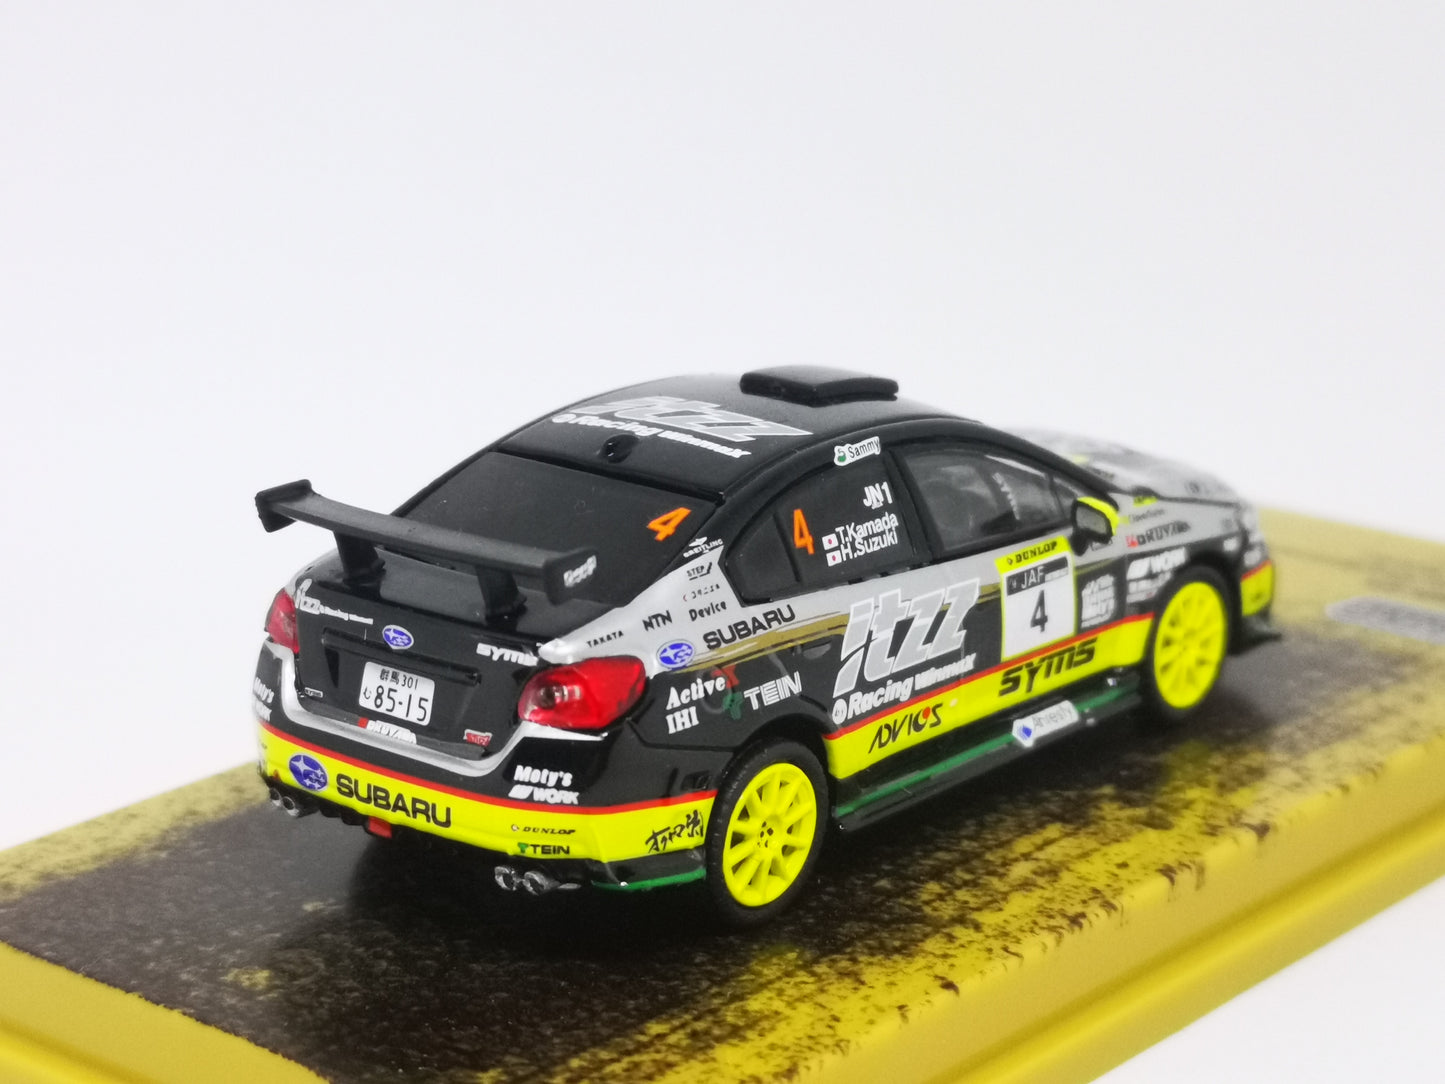 Tarmac Works Subaru WRX STI
JAF All Japan Rally Championship 2019